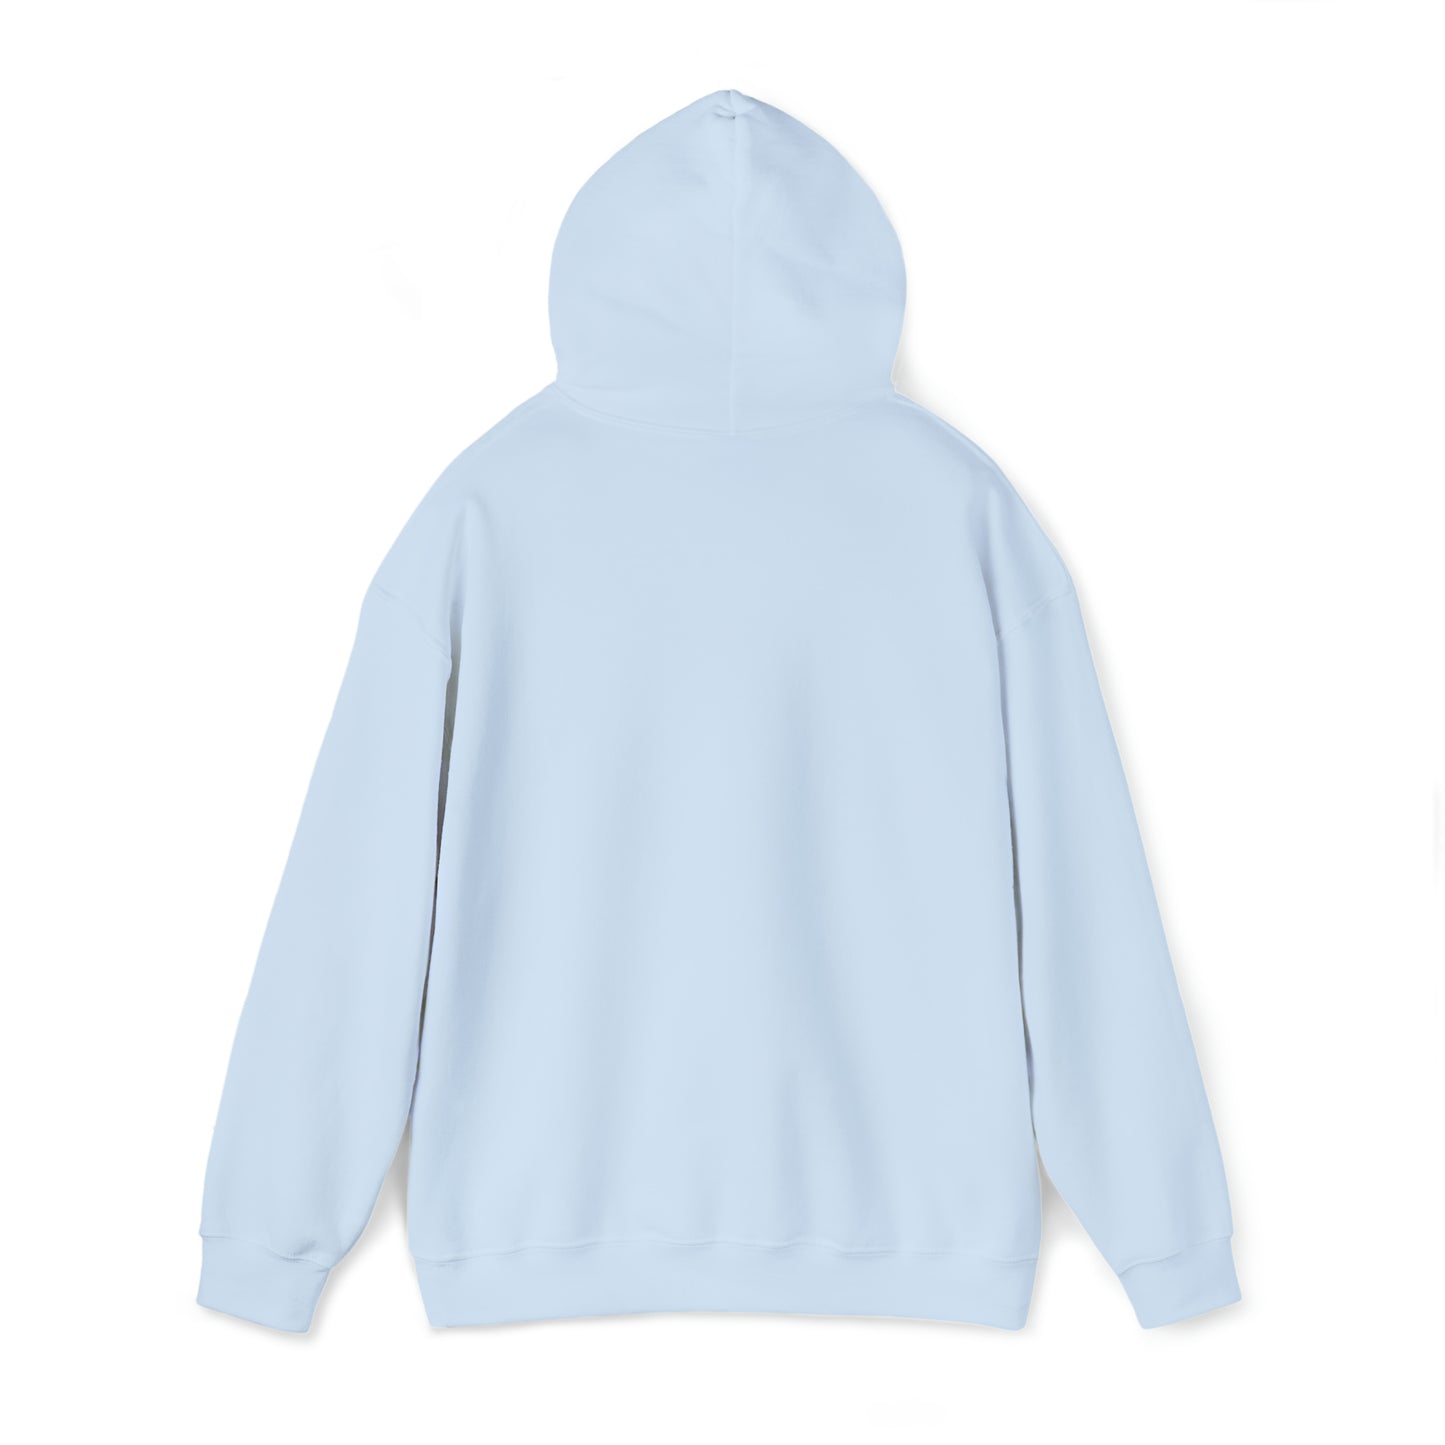 Betka- Pope Comfy Hooded Sweatshirt